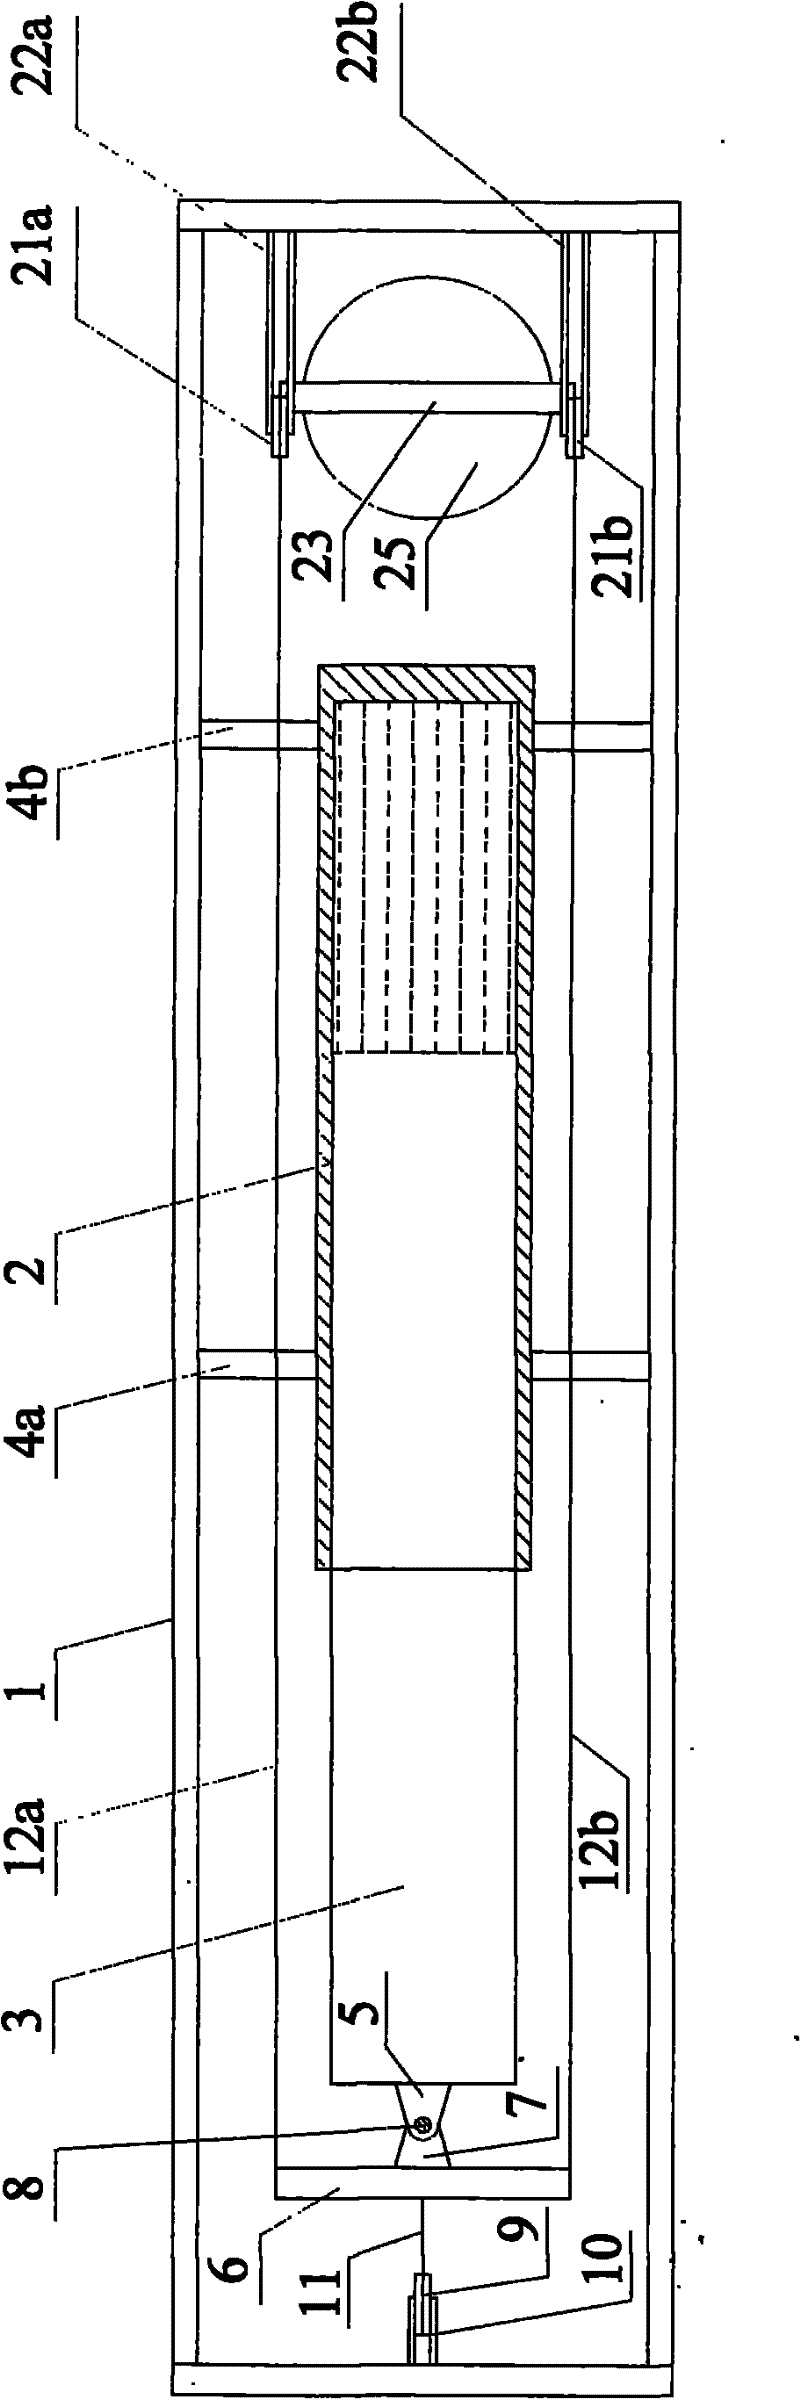 Gravity type constant-pressure liquid supply device